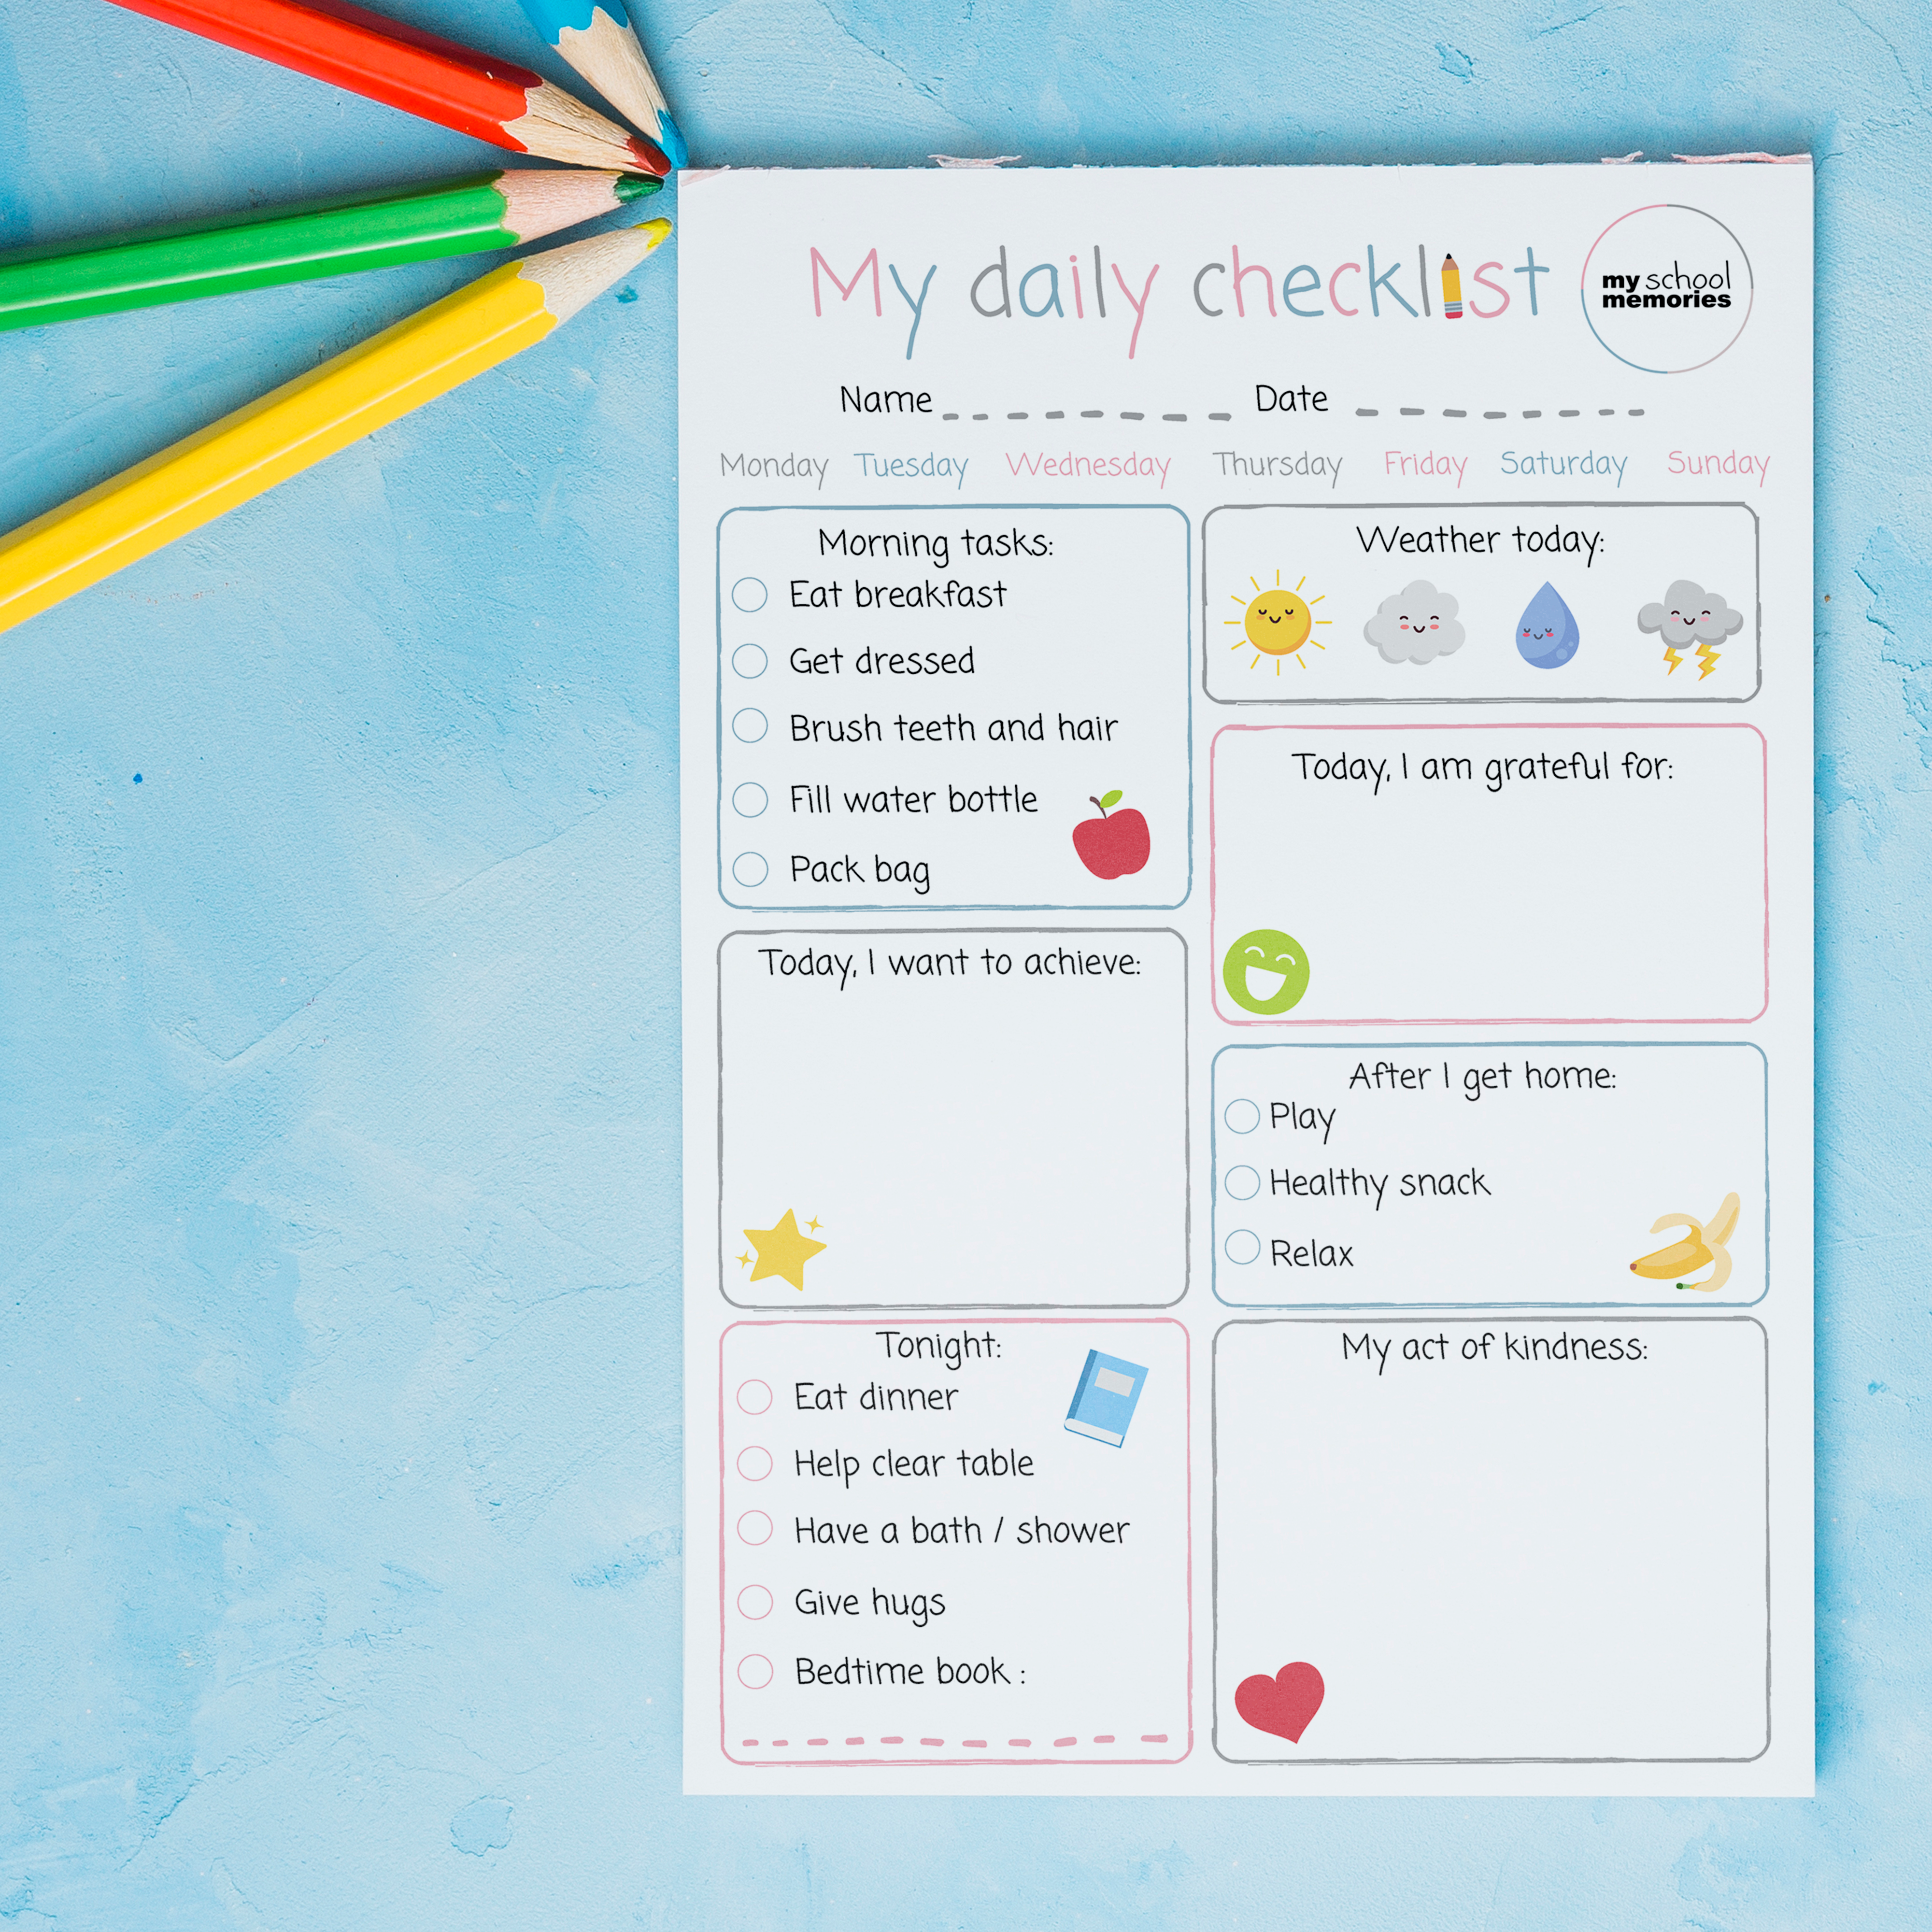 Notepad - My Daily Checklist - My School Memories